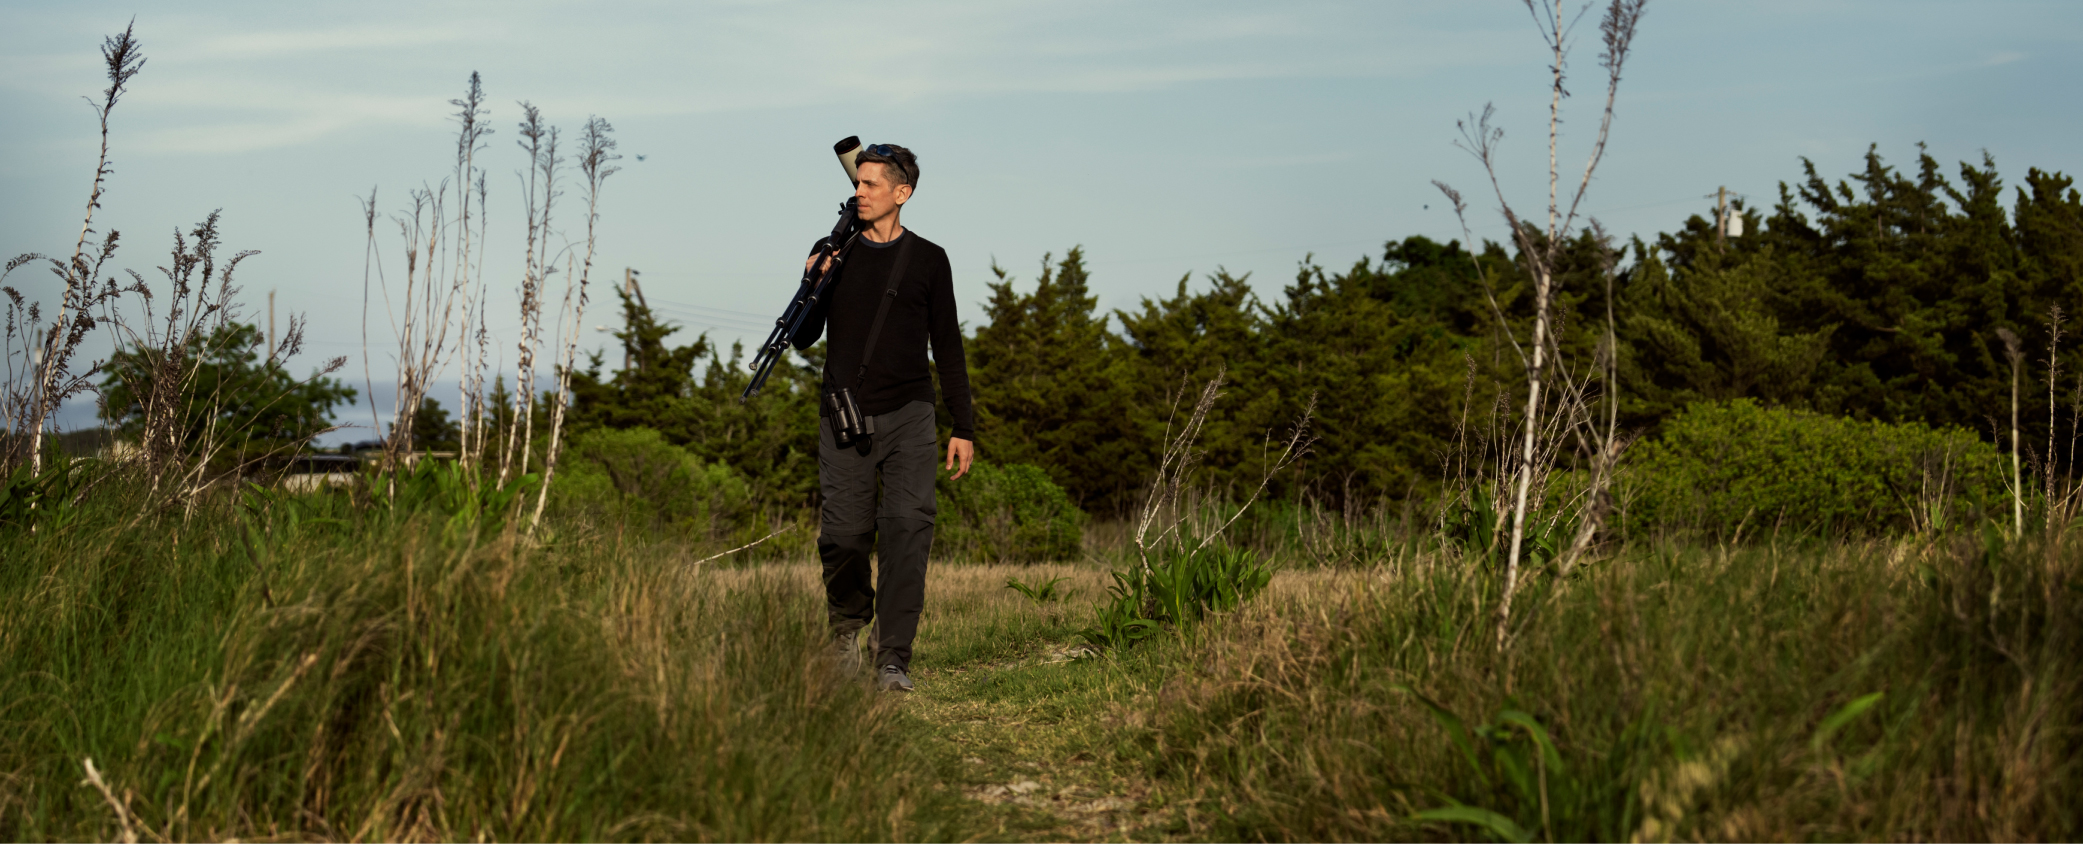 Scientist Jay Bolden walking through a coastal shoreline with greenery